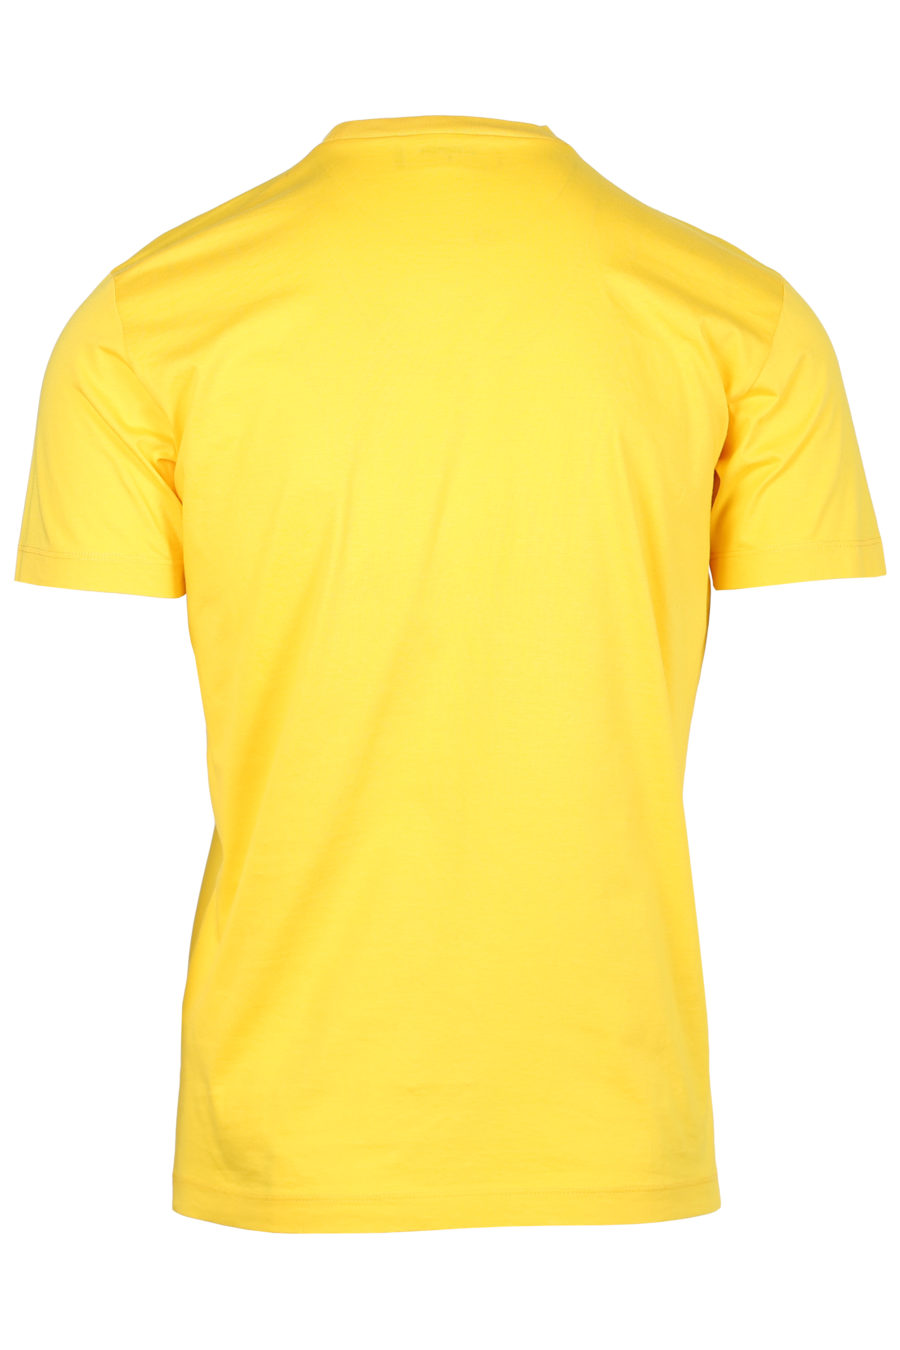 Yellow T-shirt with "Icon Spray" logo - IMG 2330